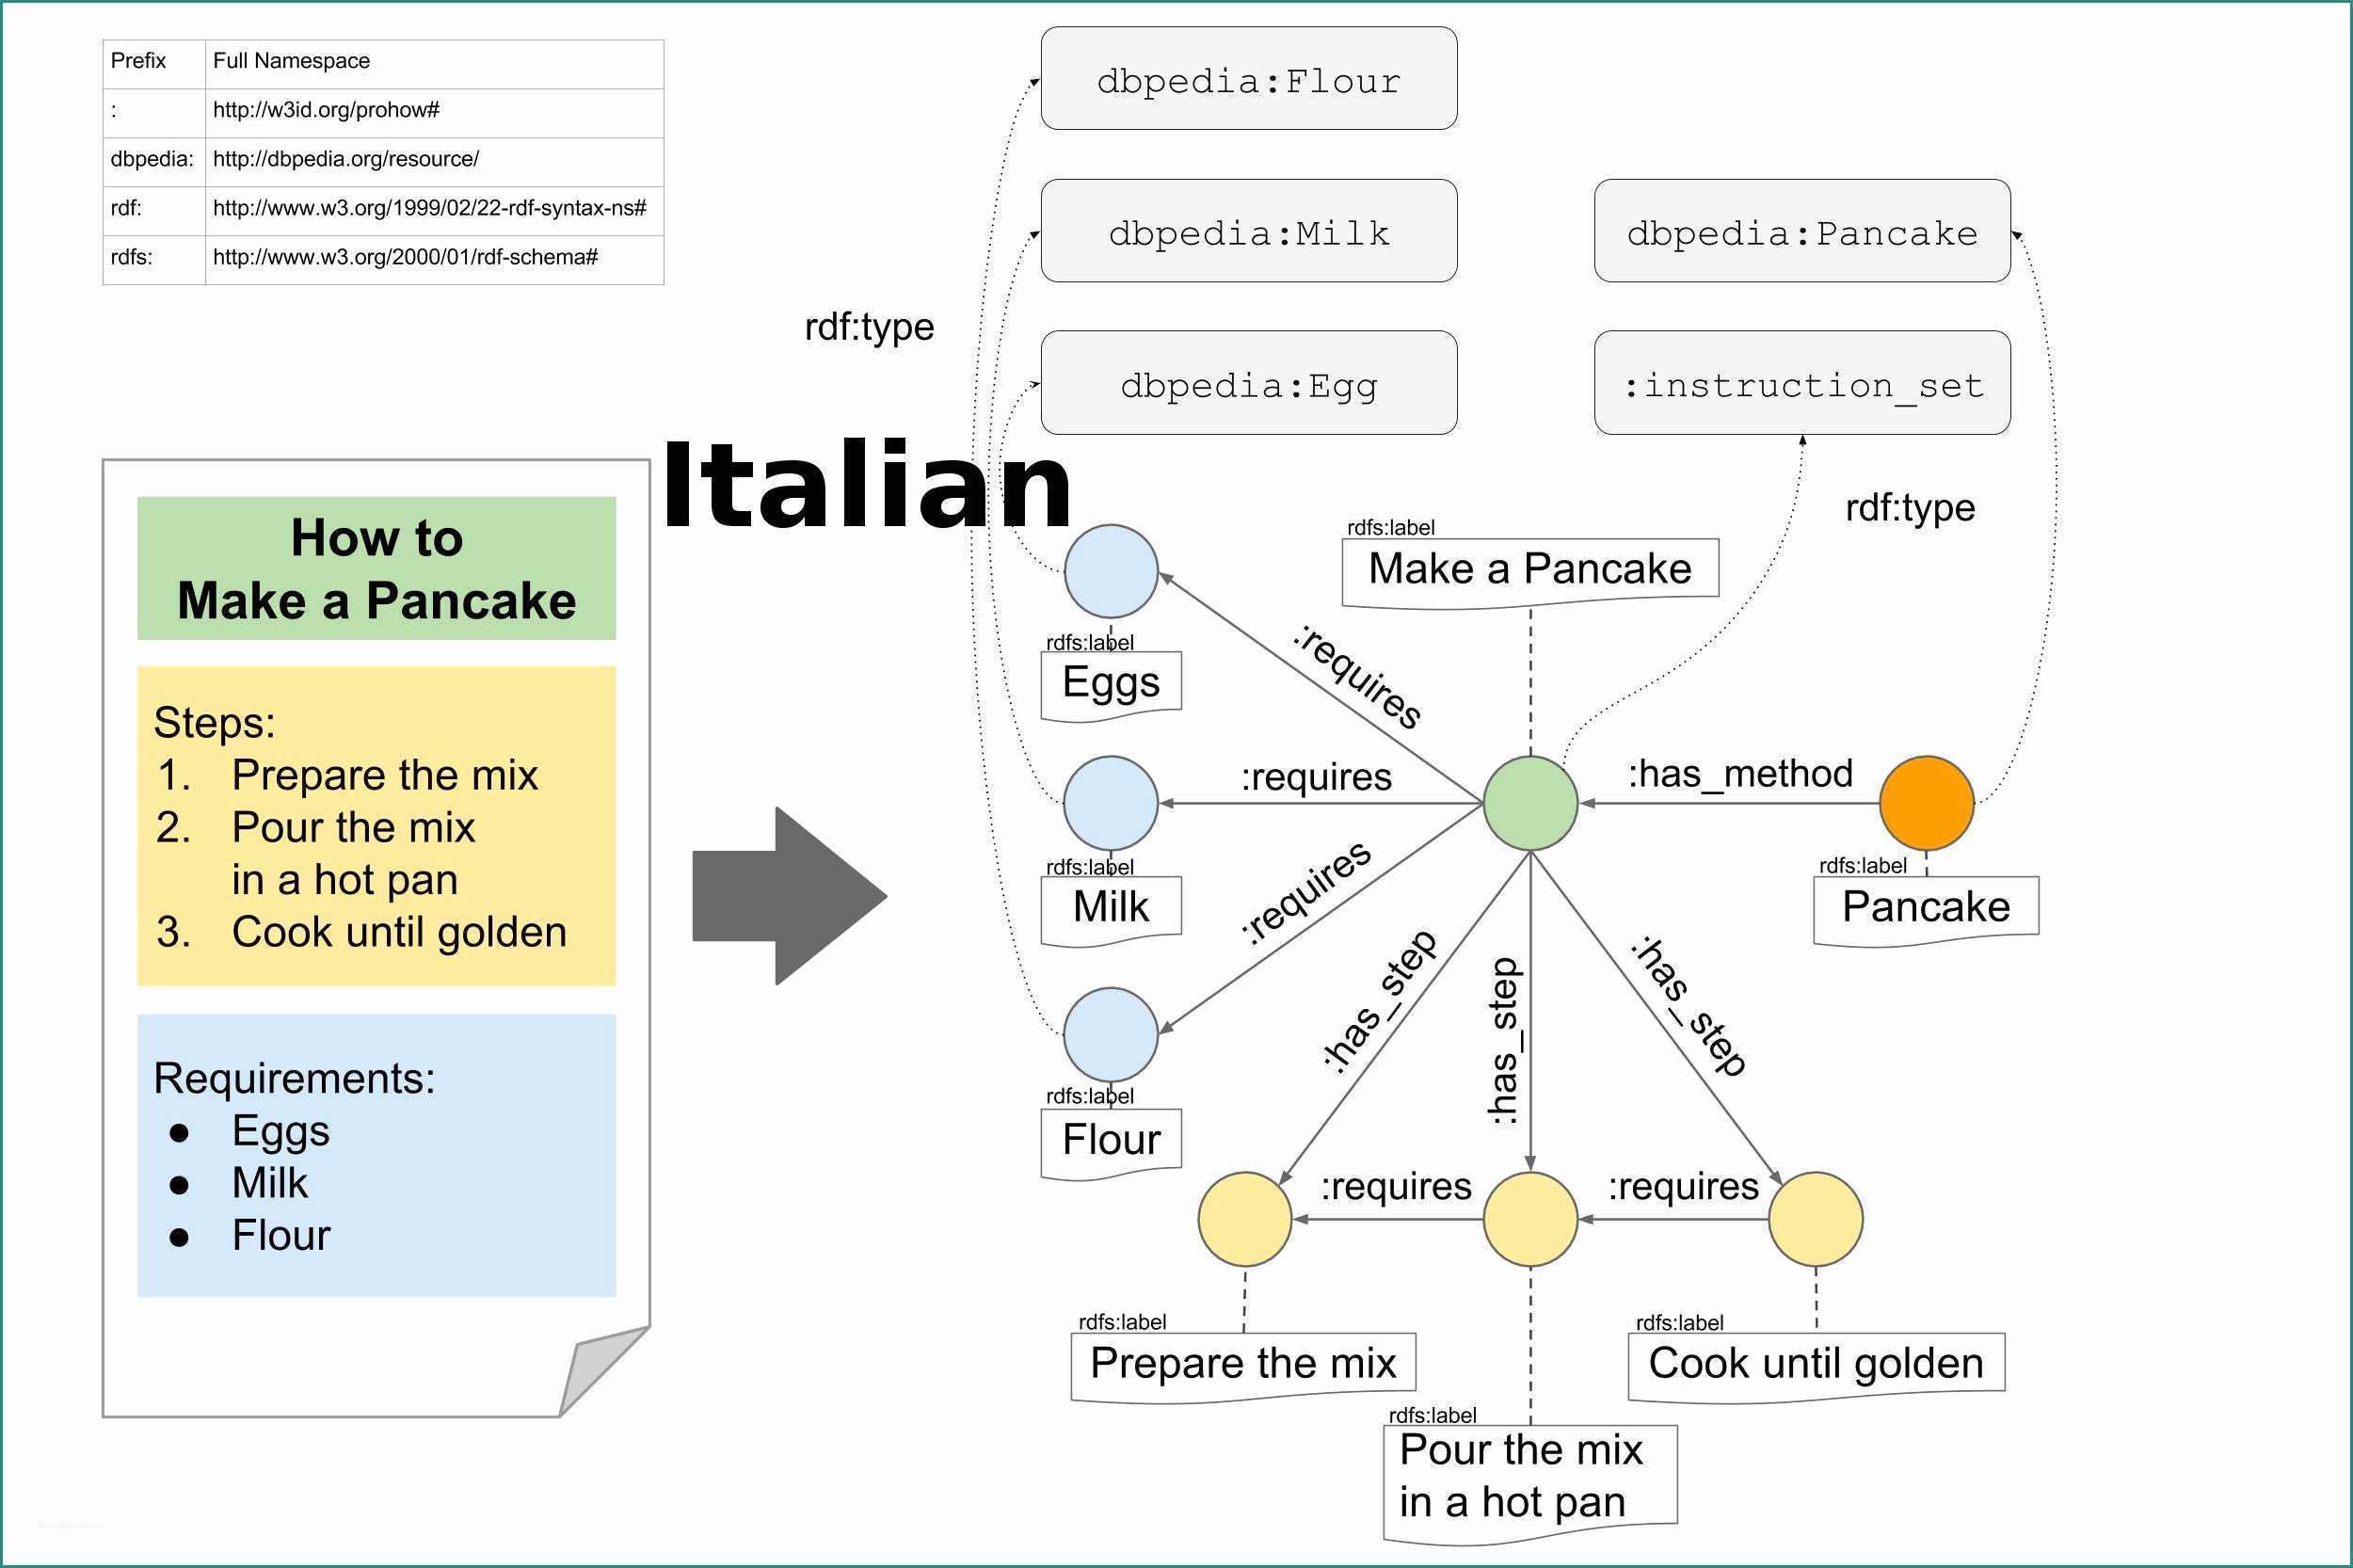 Ponte sollevatore Moto Fai Da Te E Human Instructions Italian Wikihow